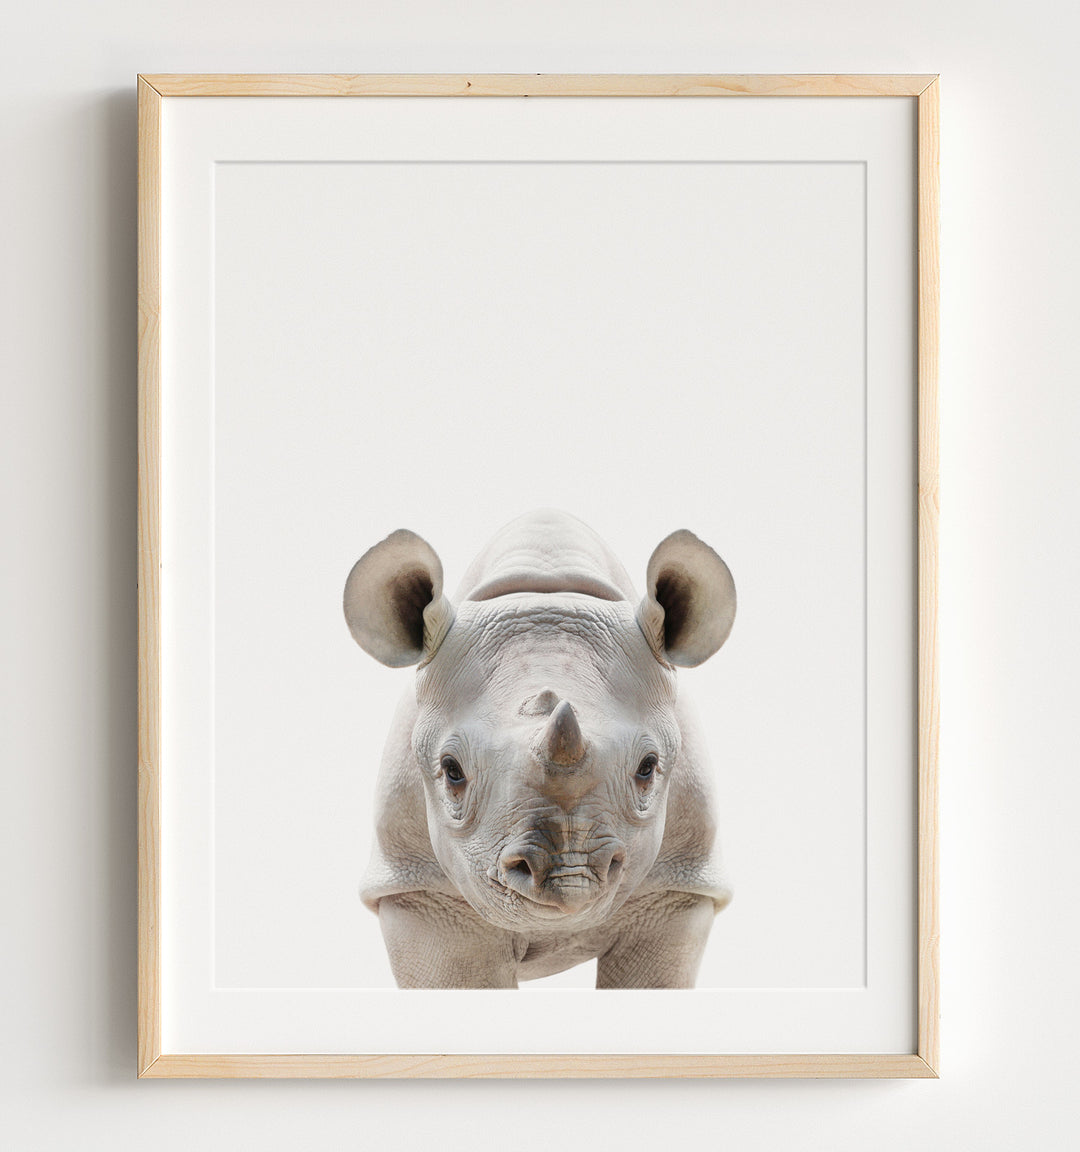 Baby animal art - rhino rhinoceros poster print from The Crown Prints